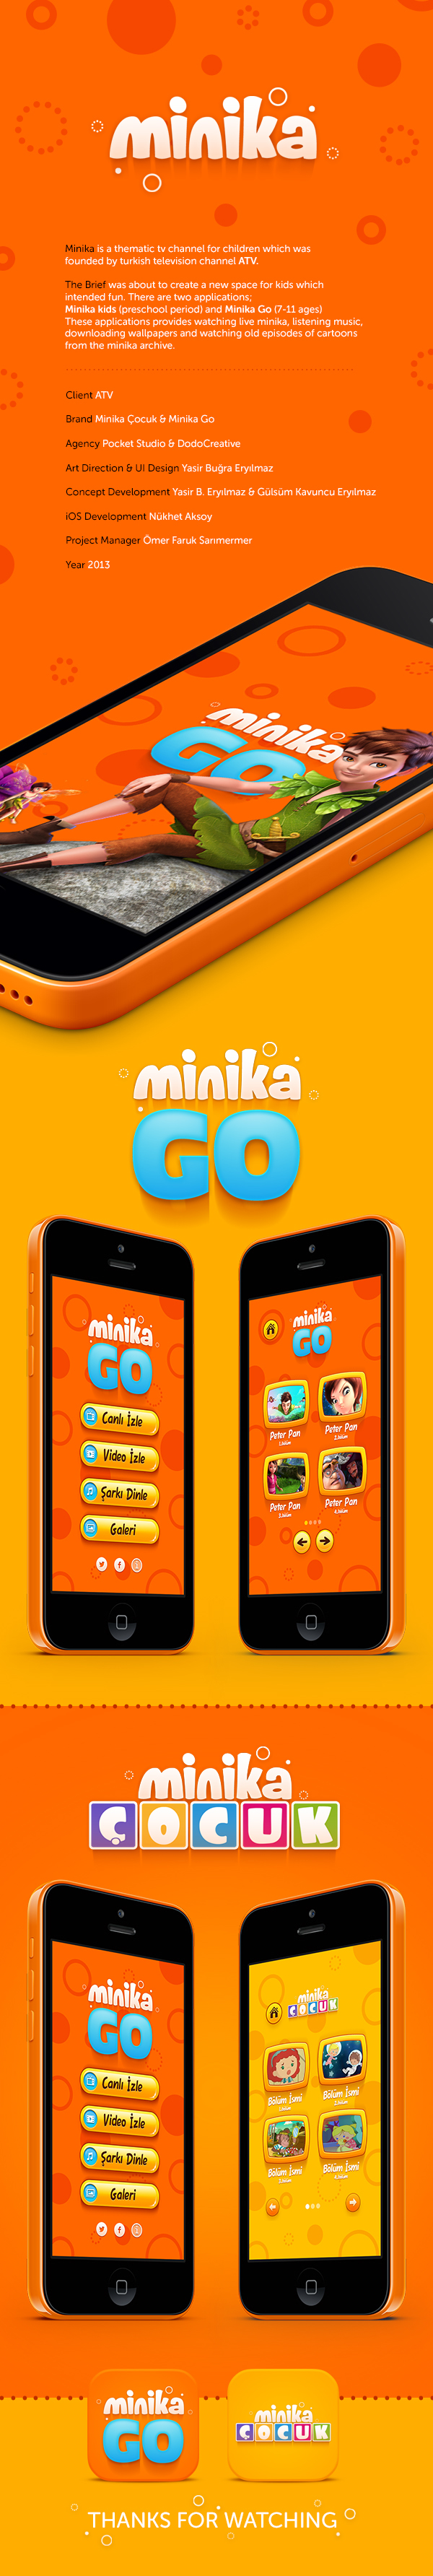 minika ATV ios game app mobile live tv television Channel watch user interface kids children